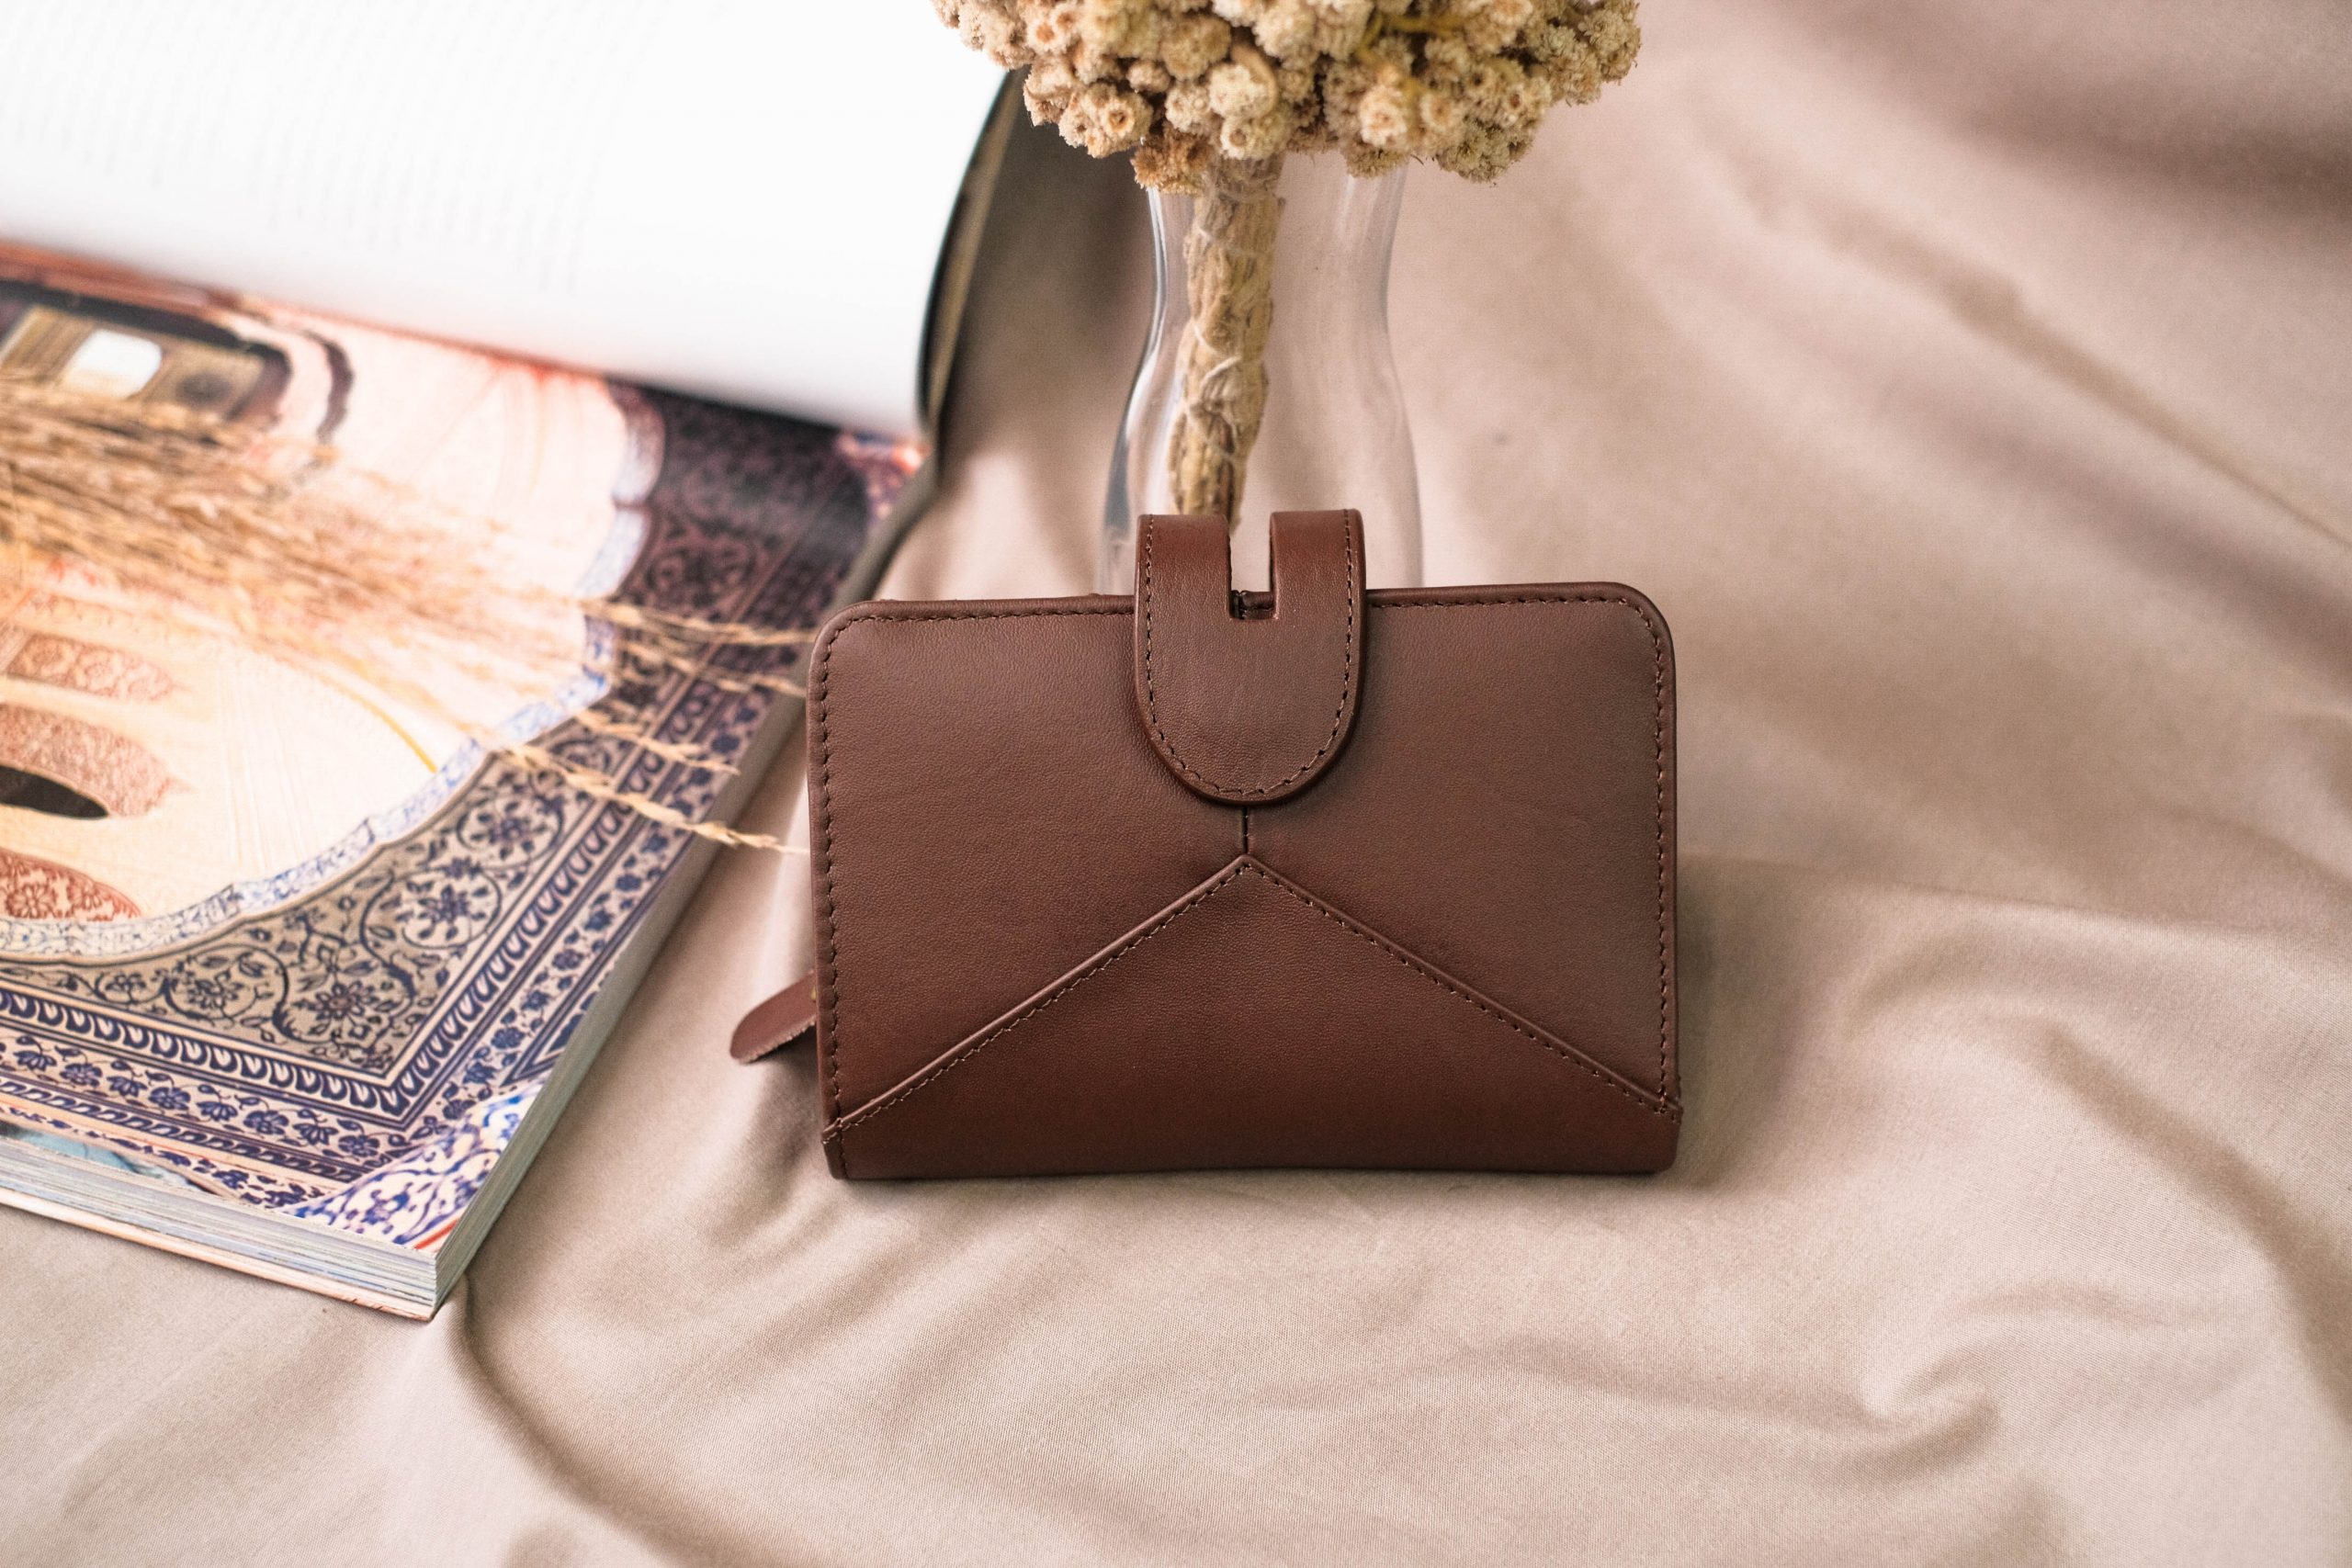 Cantika wallet dompet kulit asli untuk wanita dari Ataya Leather